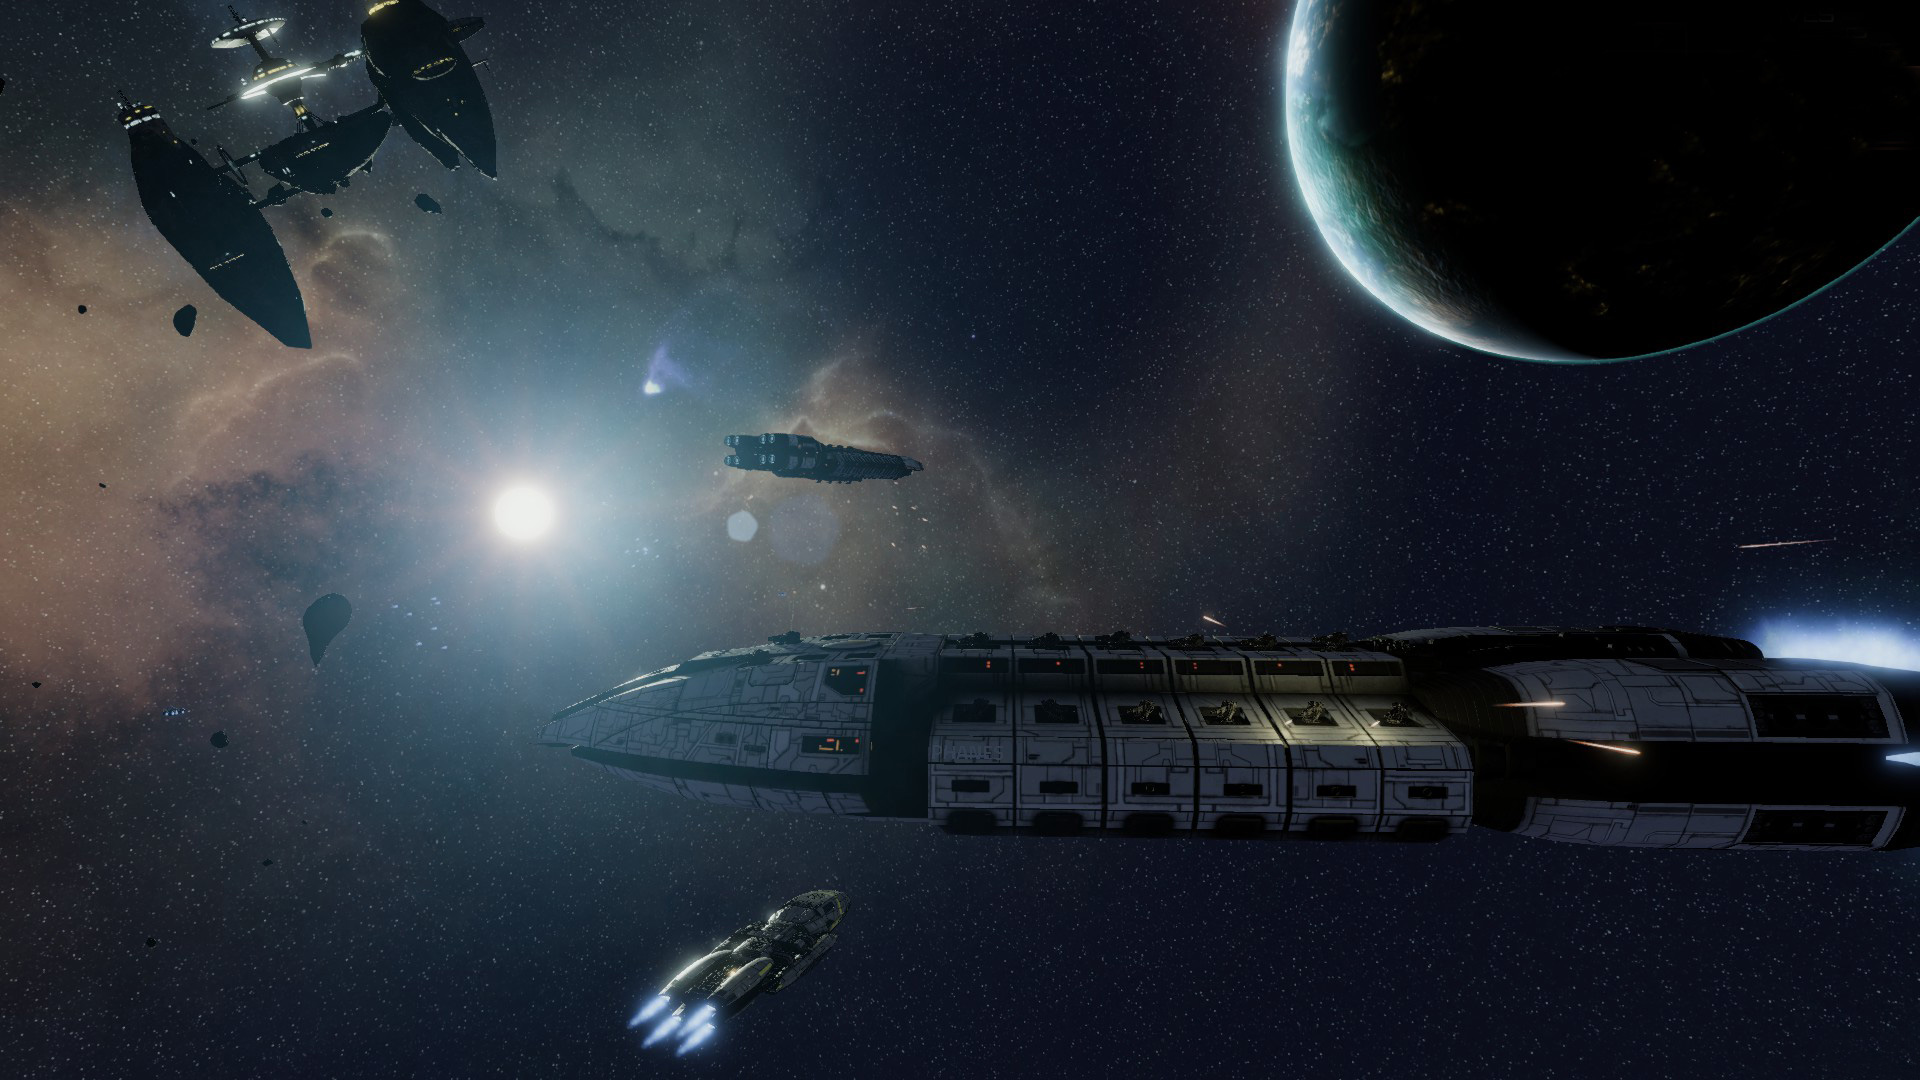 Battlestar Galactica Deadlock on Steam